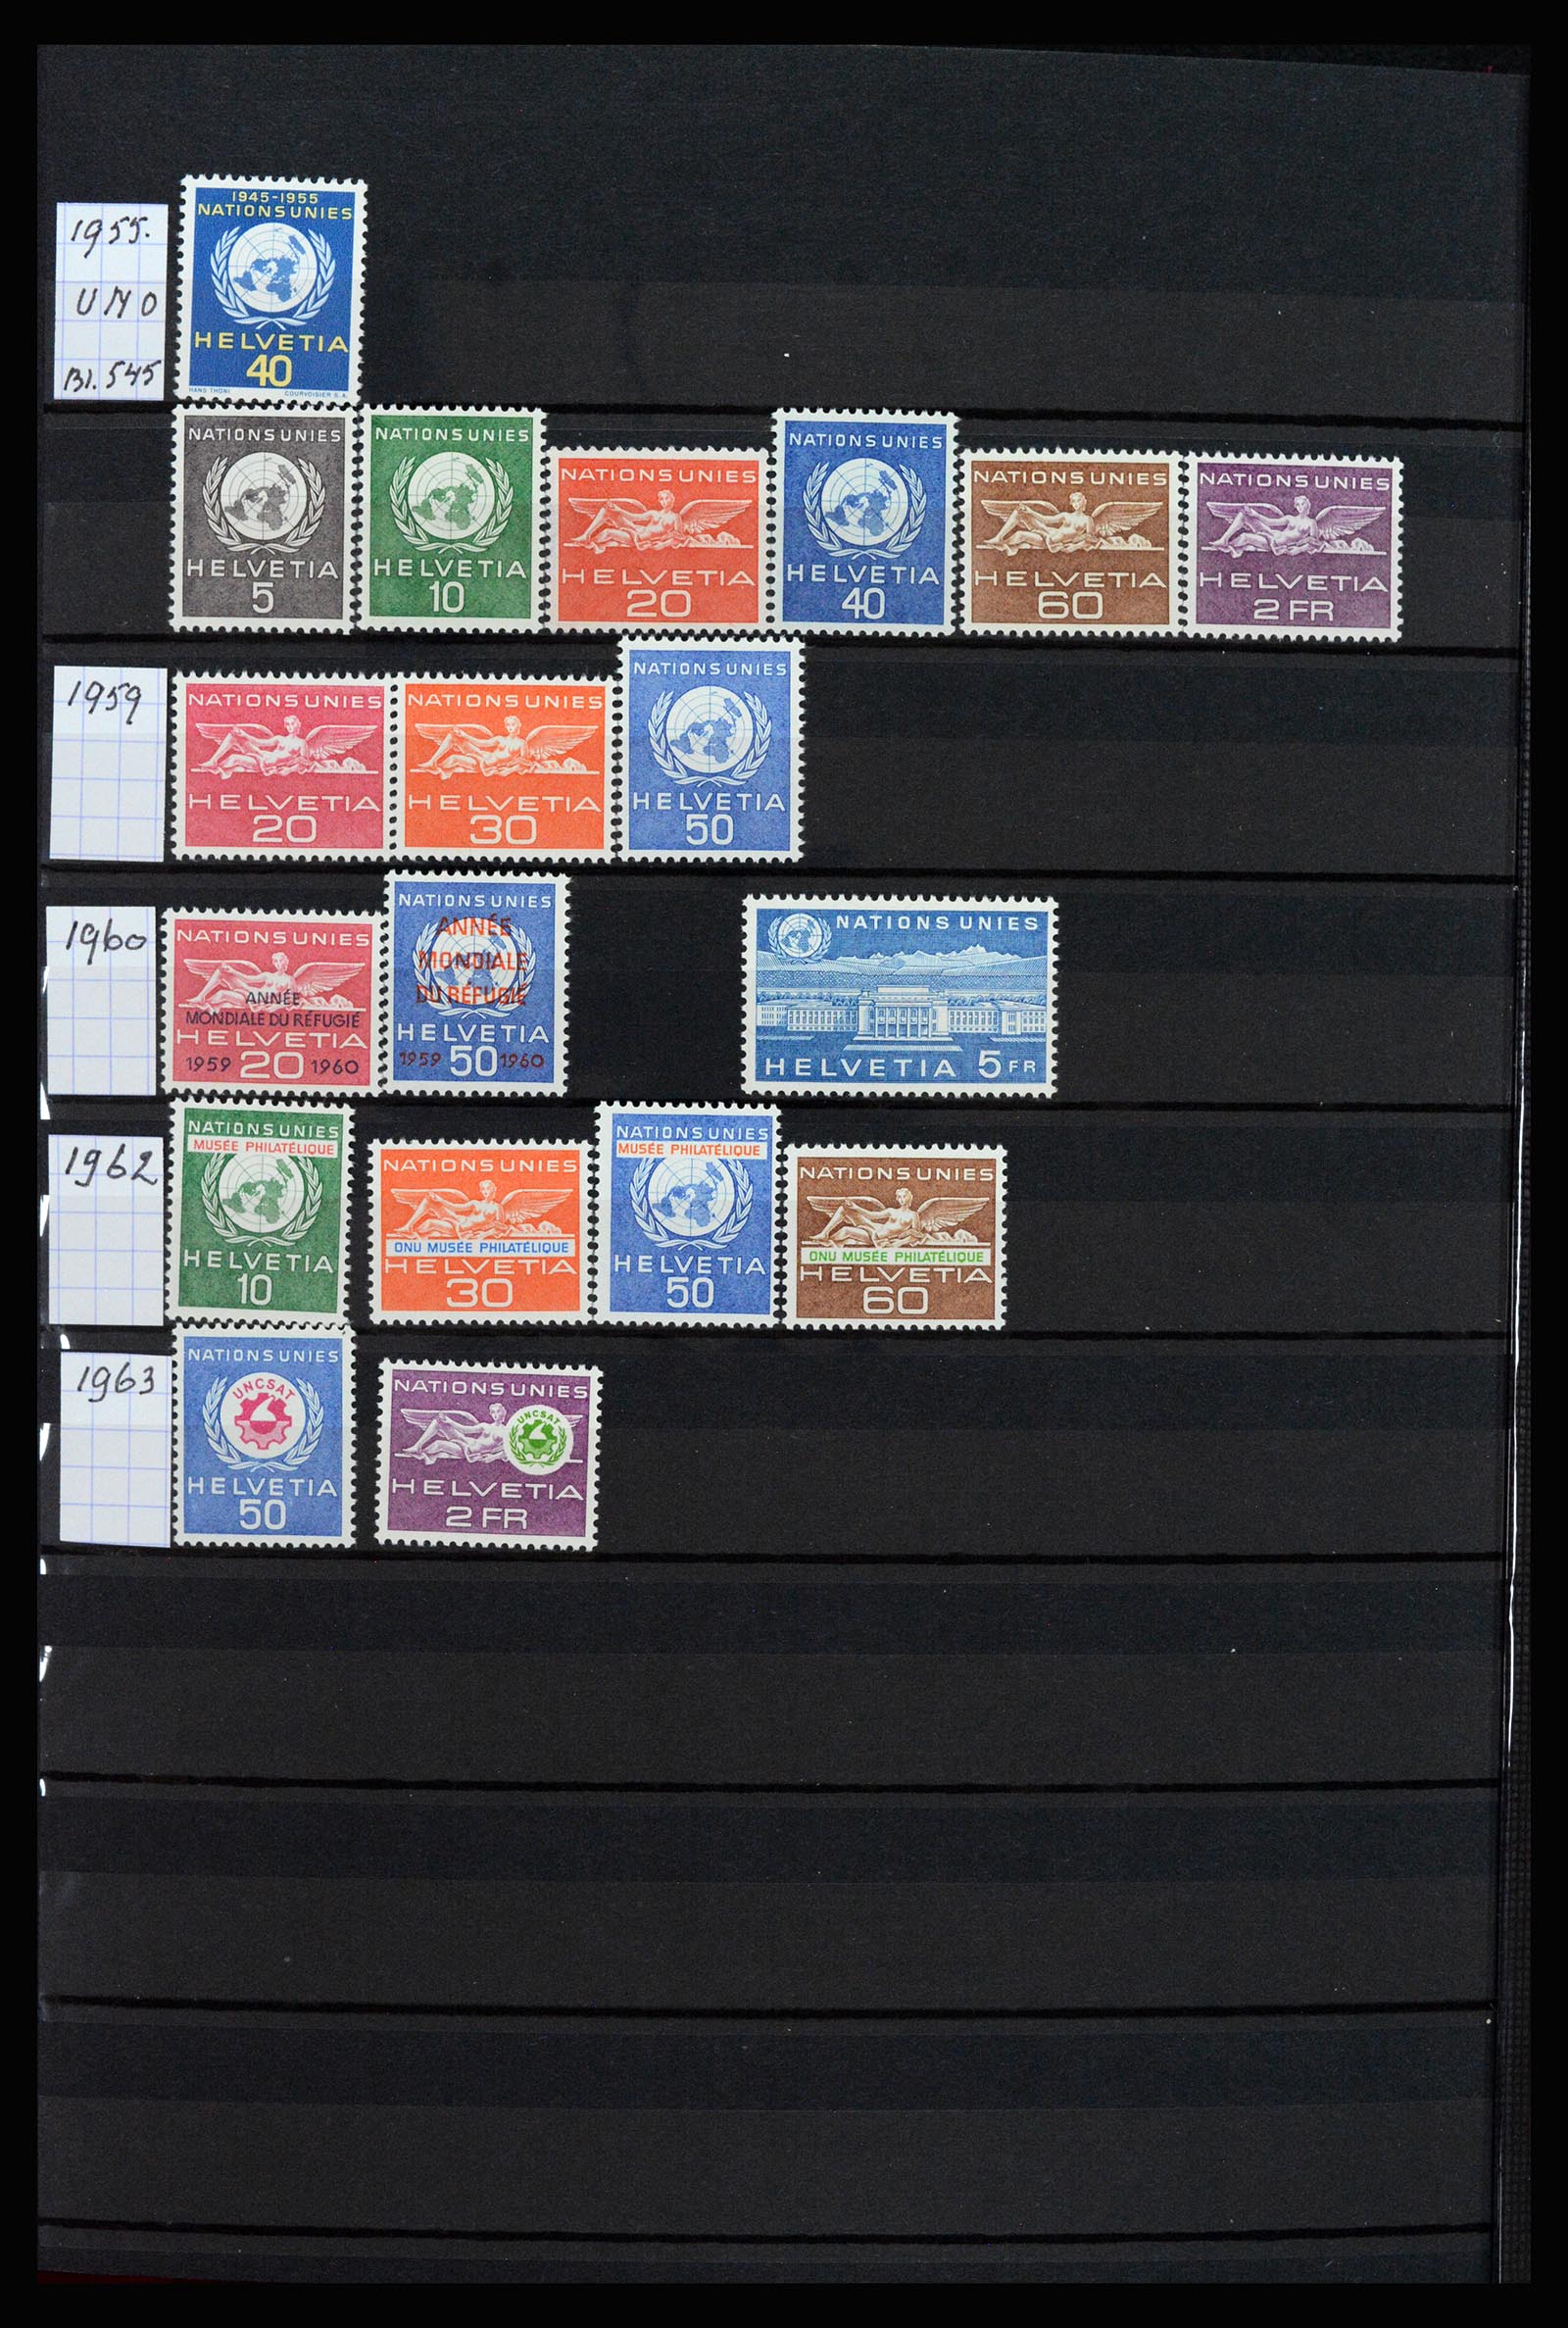 37225 166 - Stamp collection 37225 Switzerland 1854-2020.